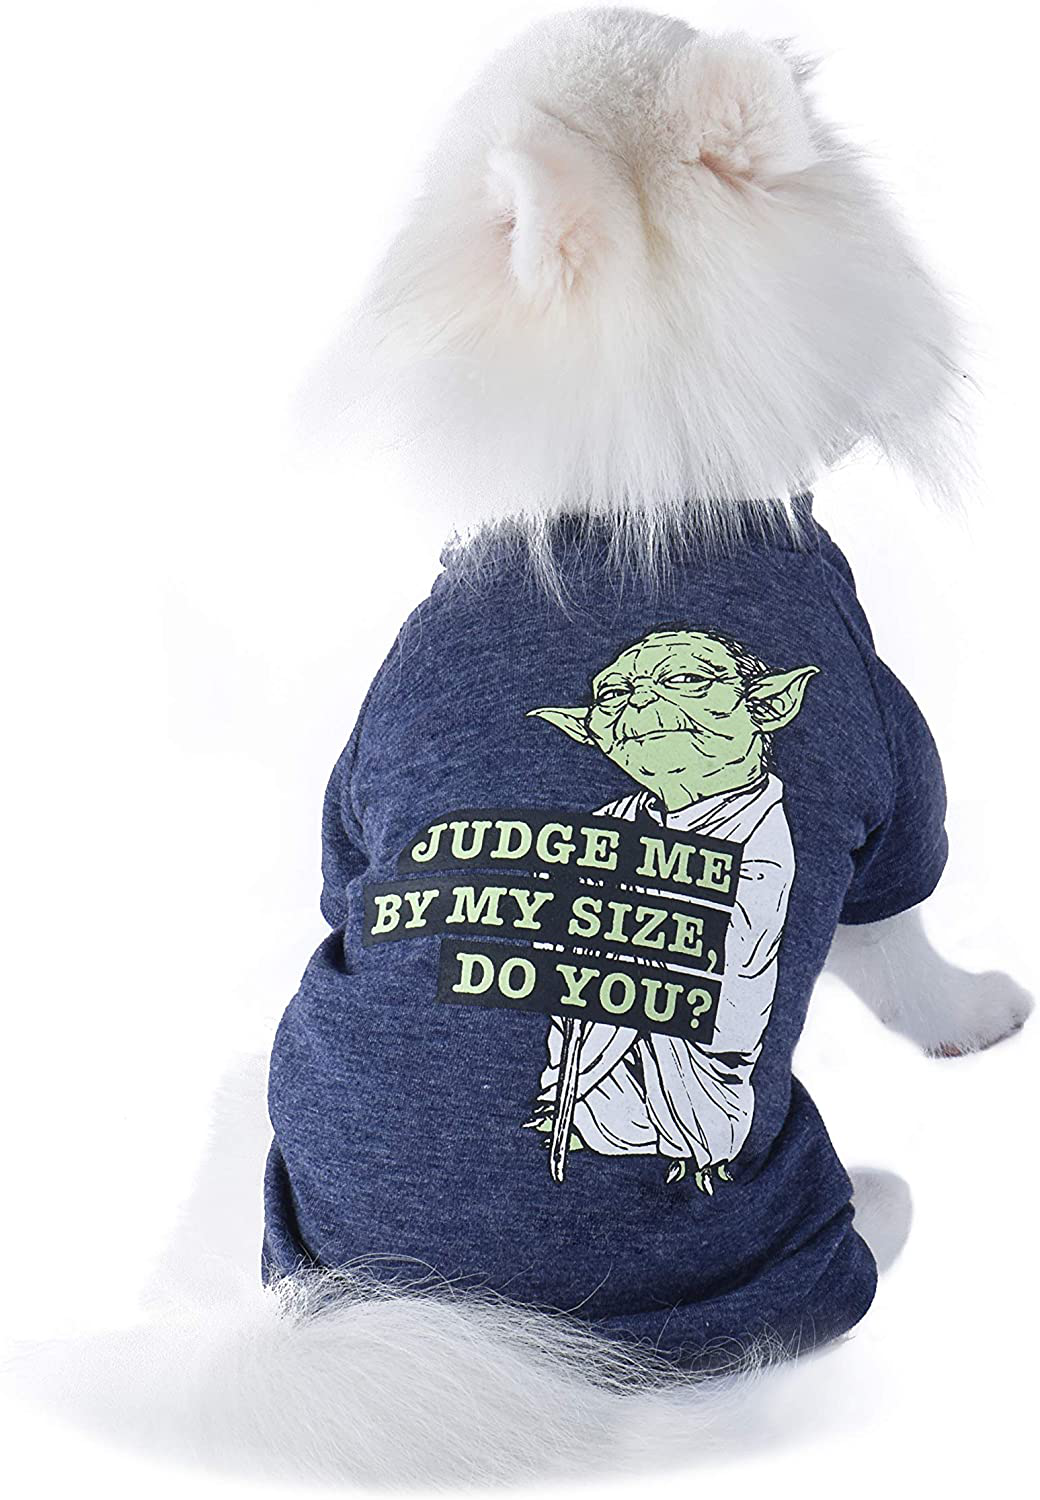 Star Wars for Pets Yoda Dog Tee - Star Wars for Pets Yoda Shirt for Dogs - Star Wars Dog Costume, Dog Clothes, Star Wars Dog Shirt, Star Wars Pet Shirt, Pet Clothes, Yoda Pet Shirt